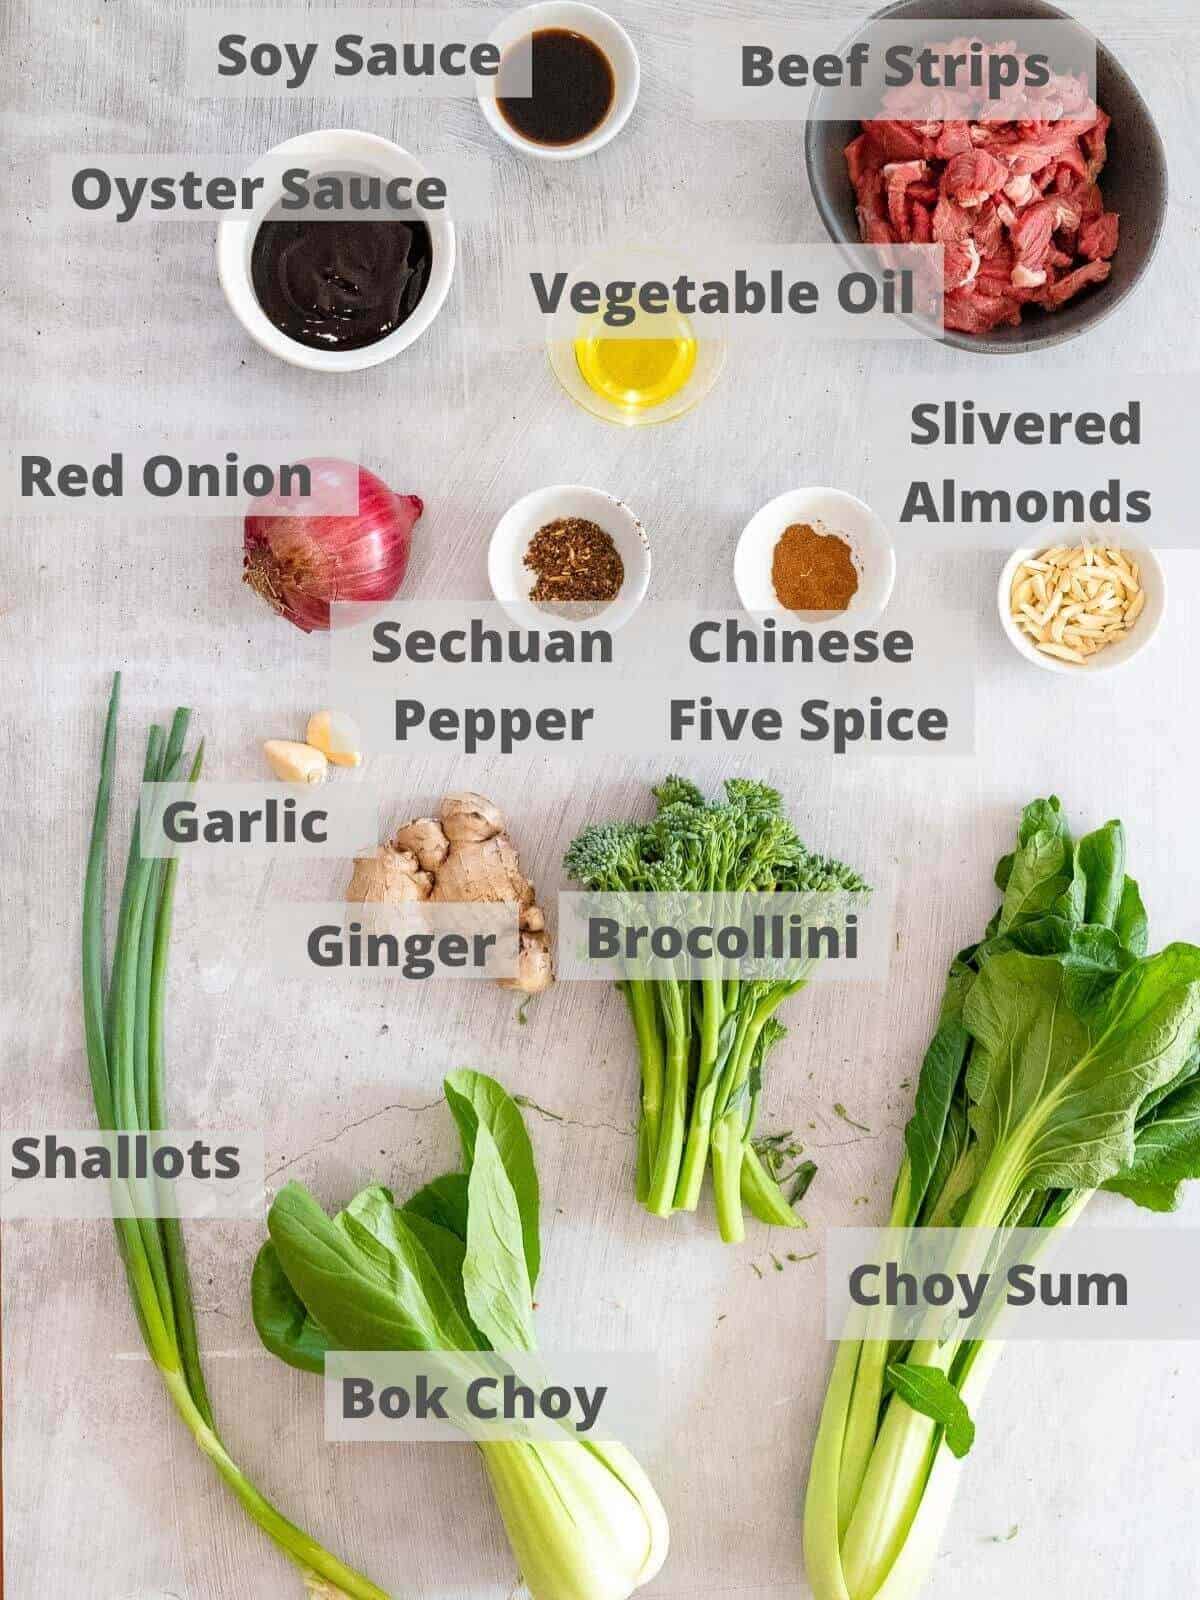 Ingredients for Szechuan beef strfry